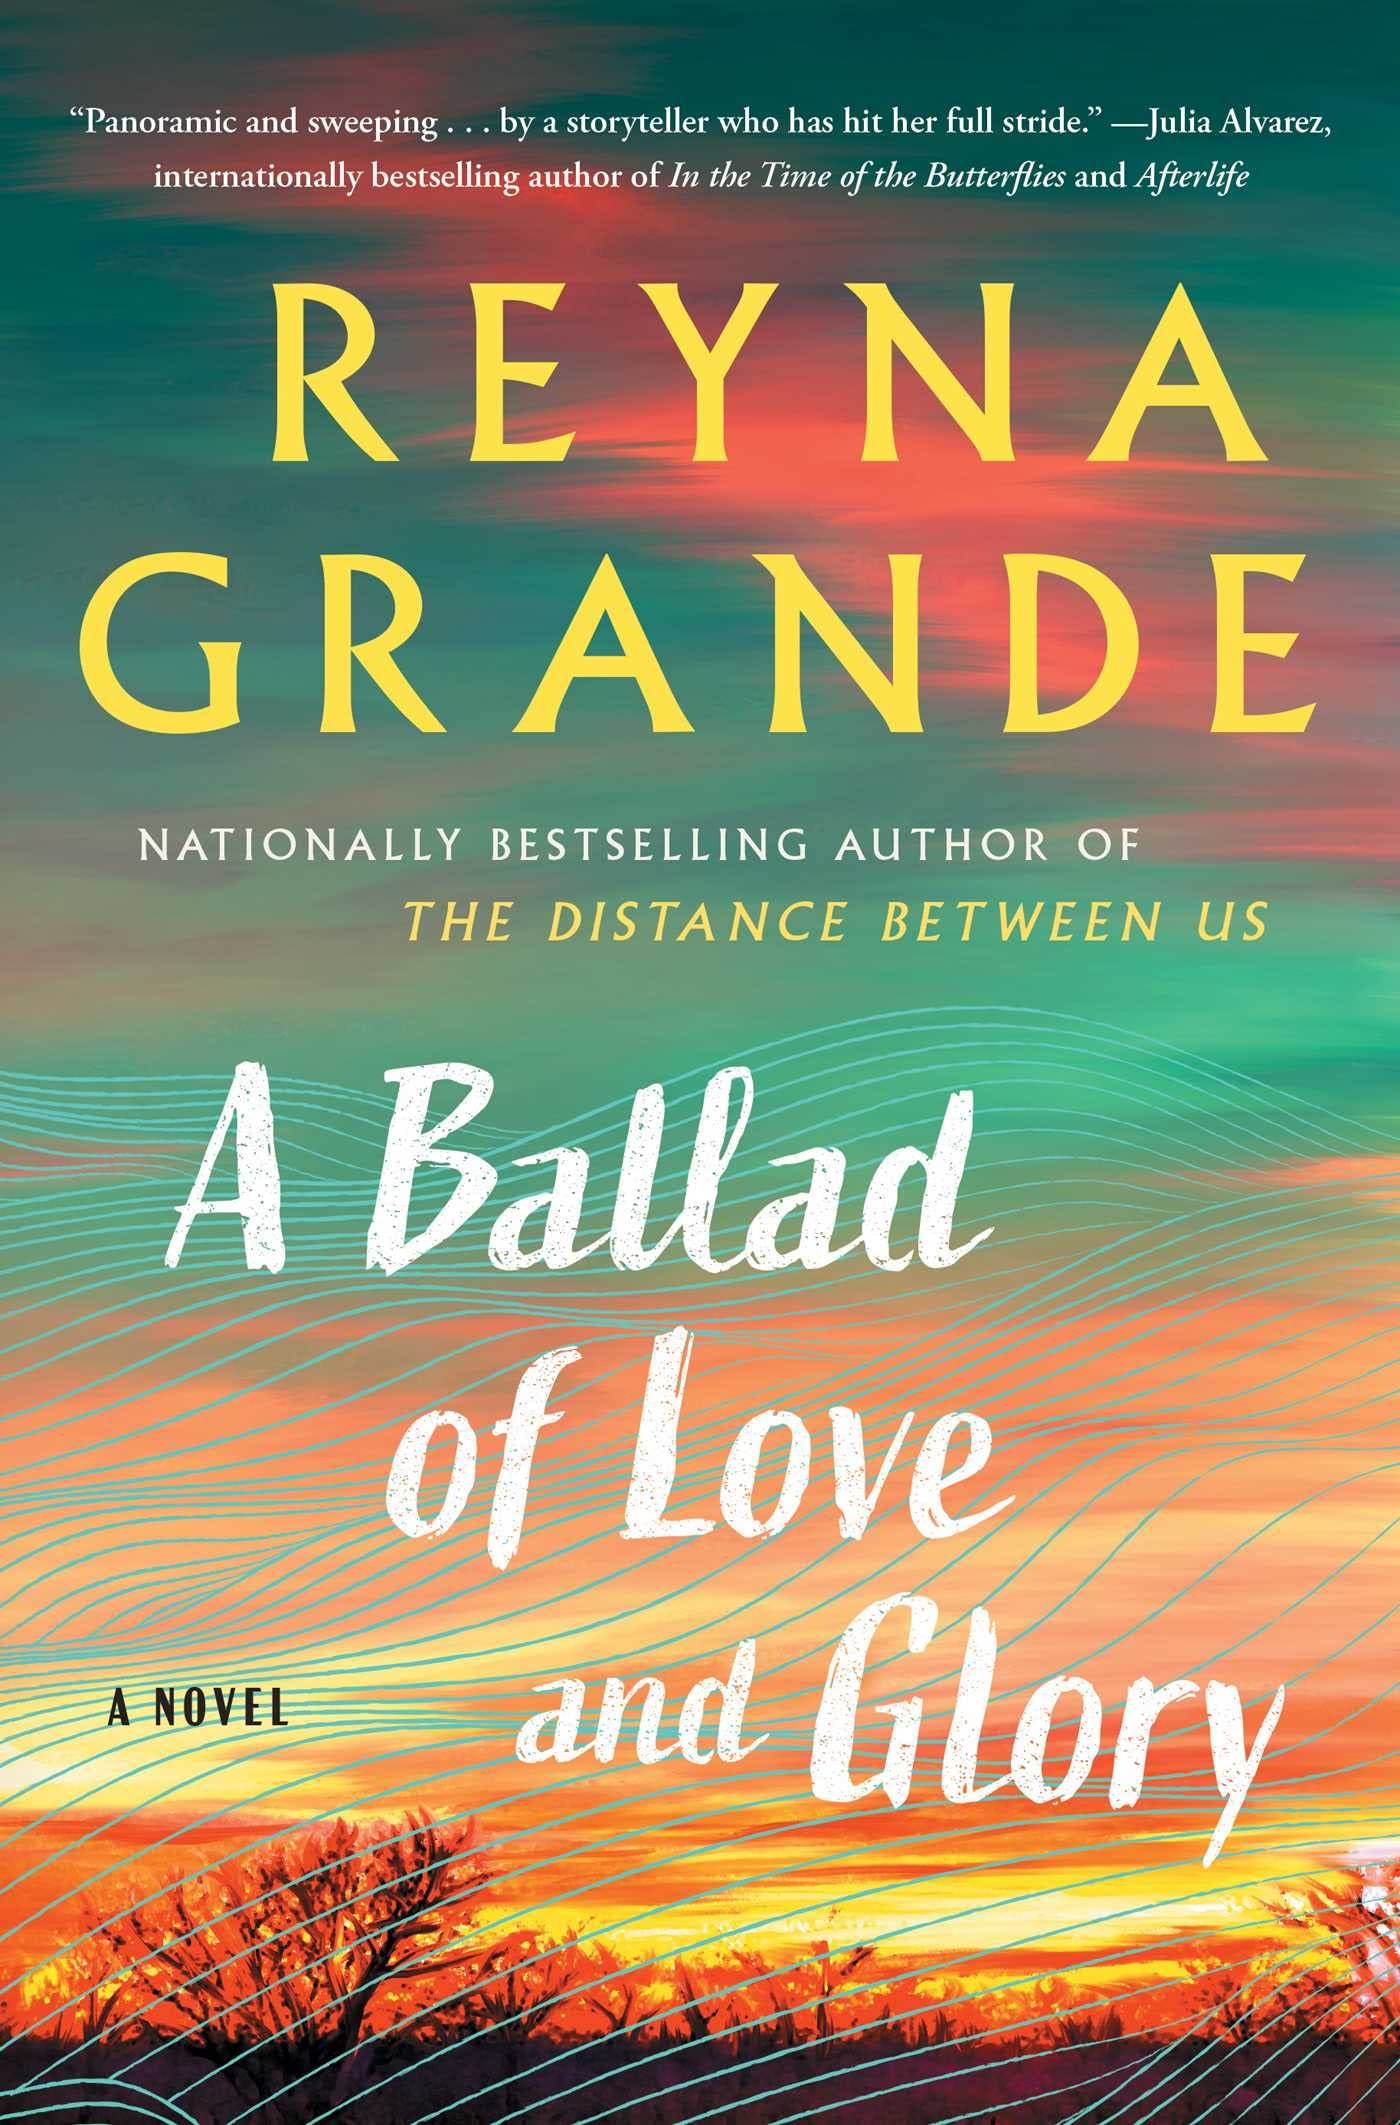 Amazon.com: A Ballad of Love and Glory: A Novel: 9781982165260: Grande,  Reyna: Books